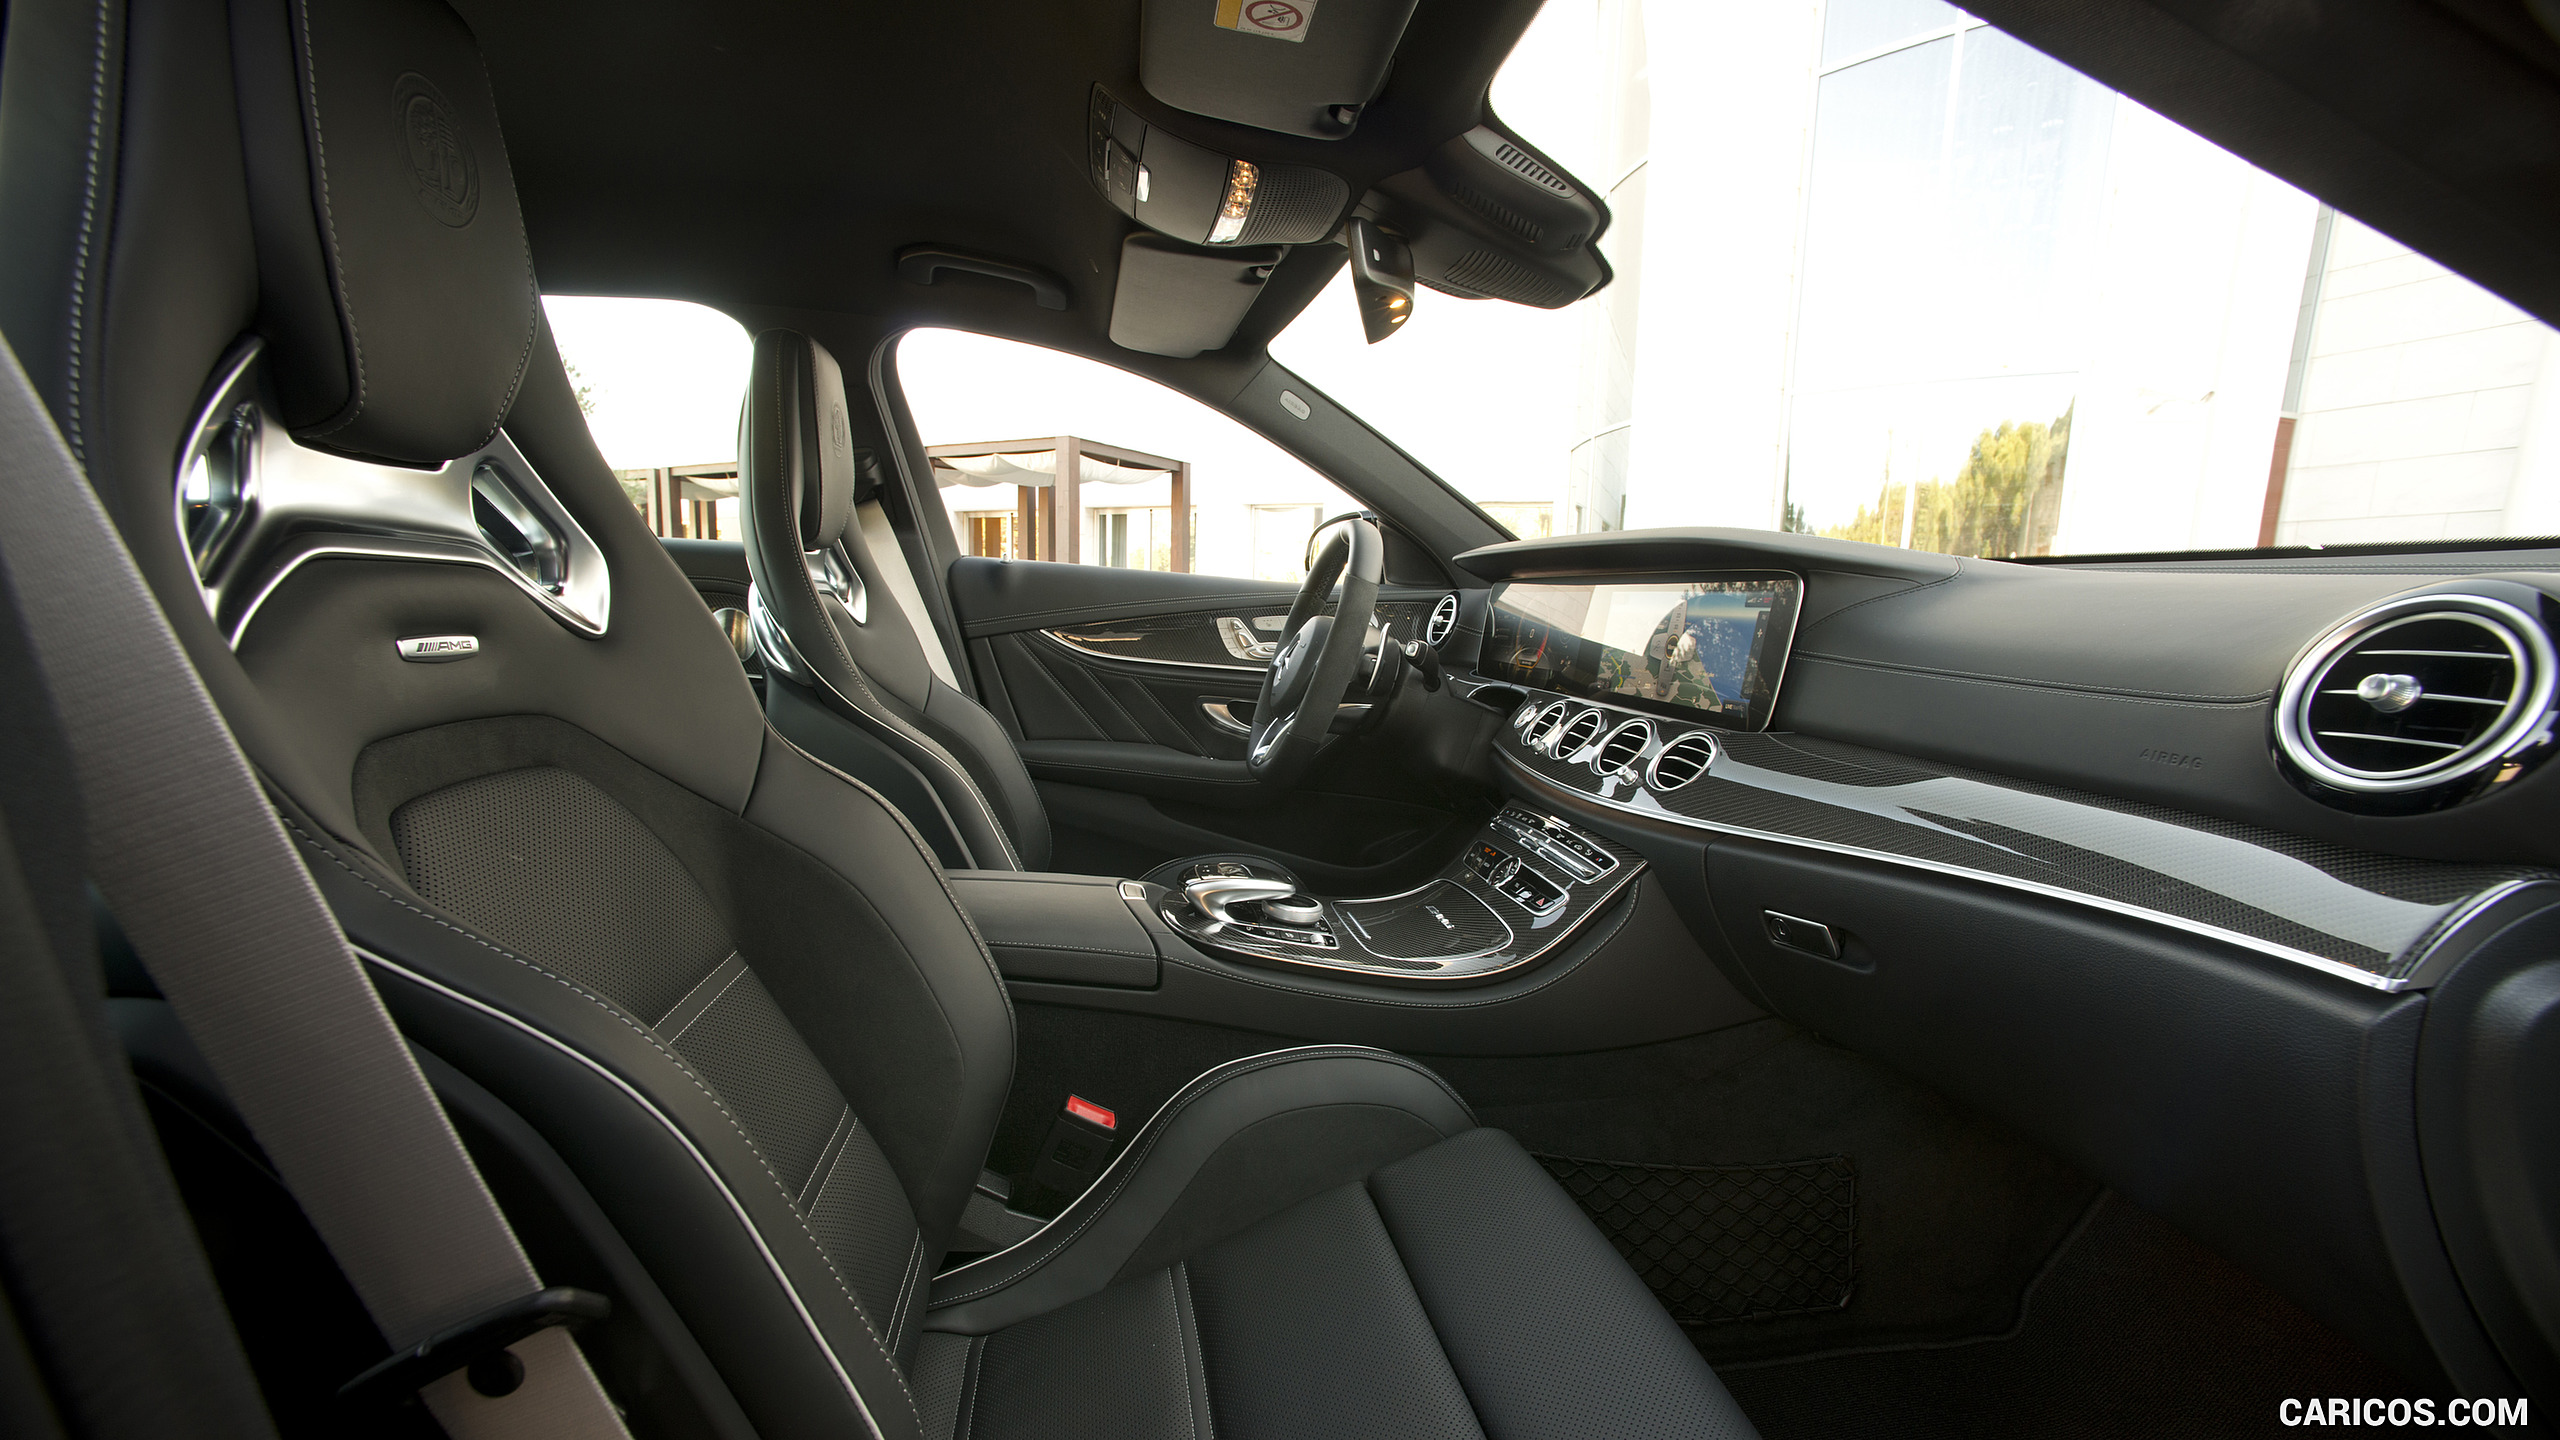 2018 Mercedes-AMG E63 S 4MATIC+ - Interior, Front Seats, #187 of 323